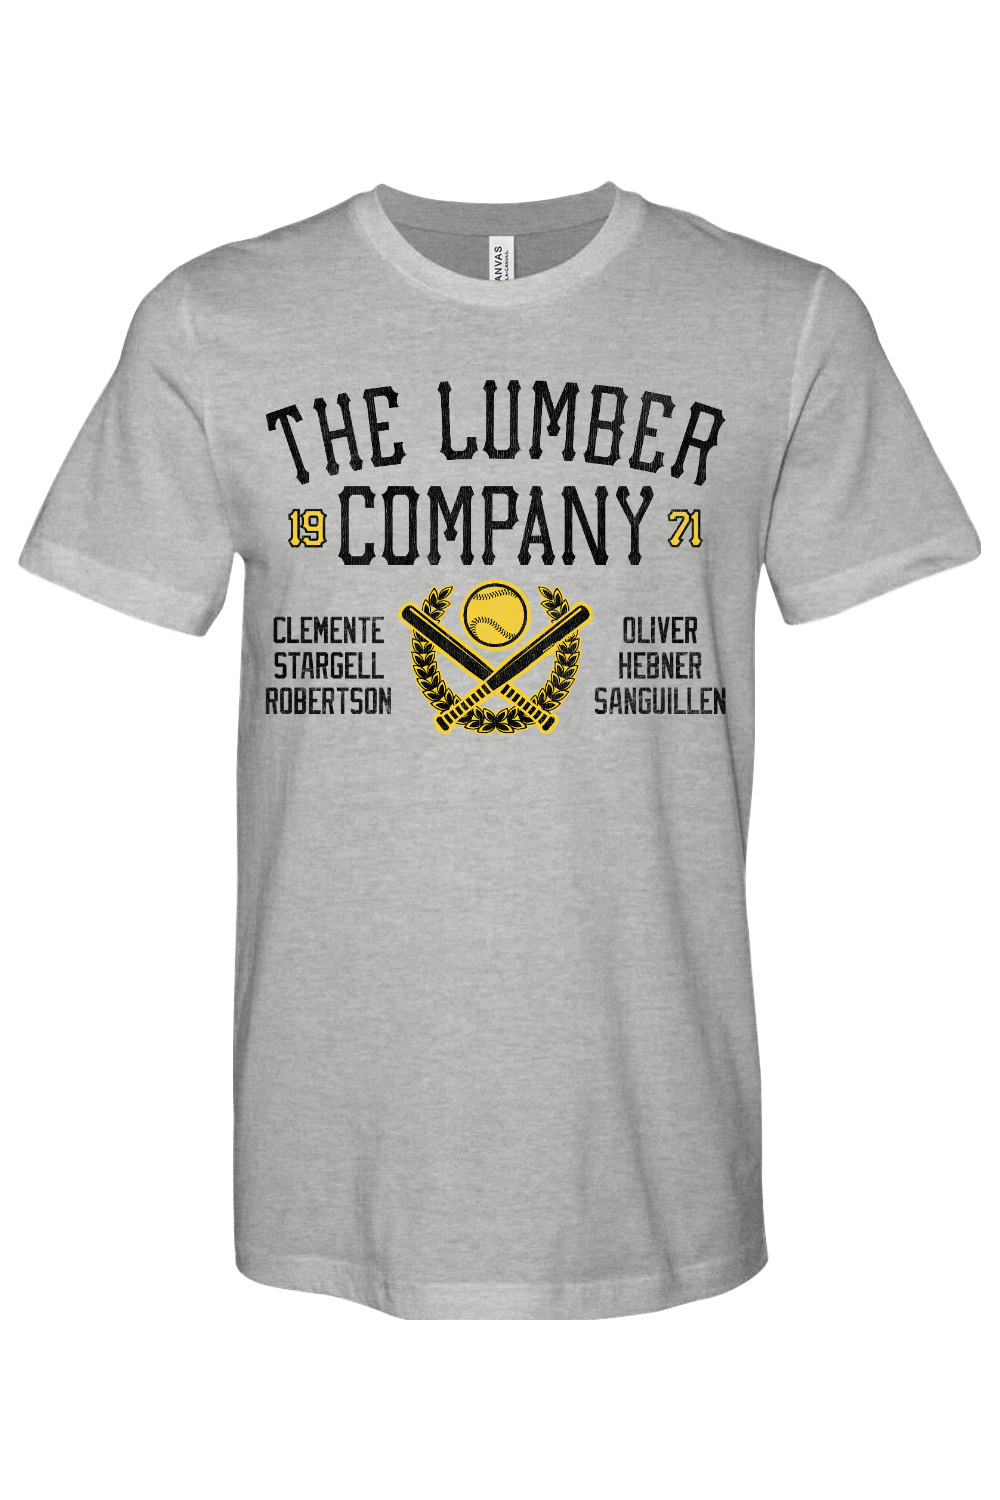 The Lumber Company - 1971 - Yinzylvania